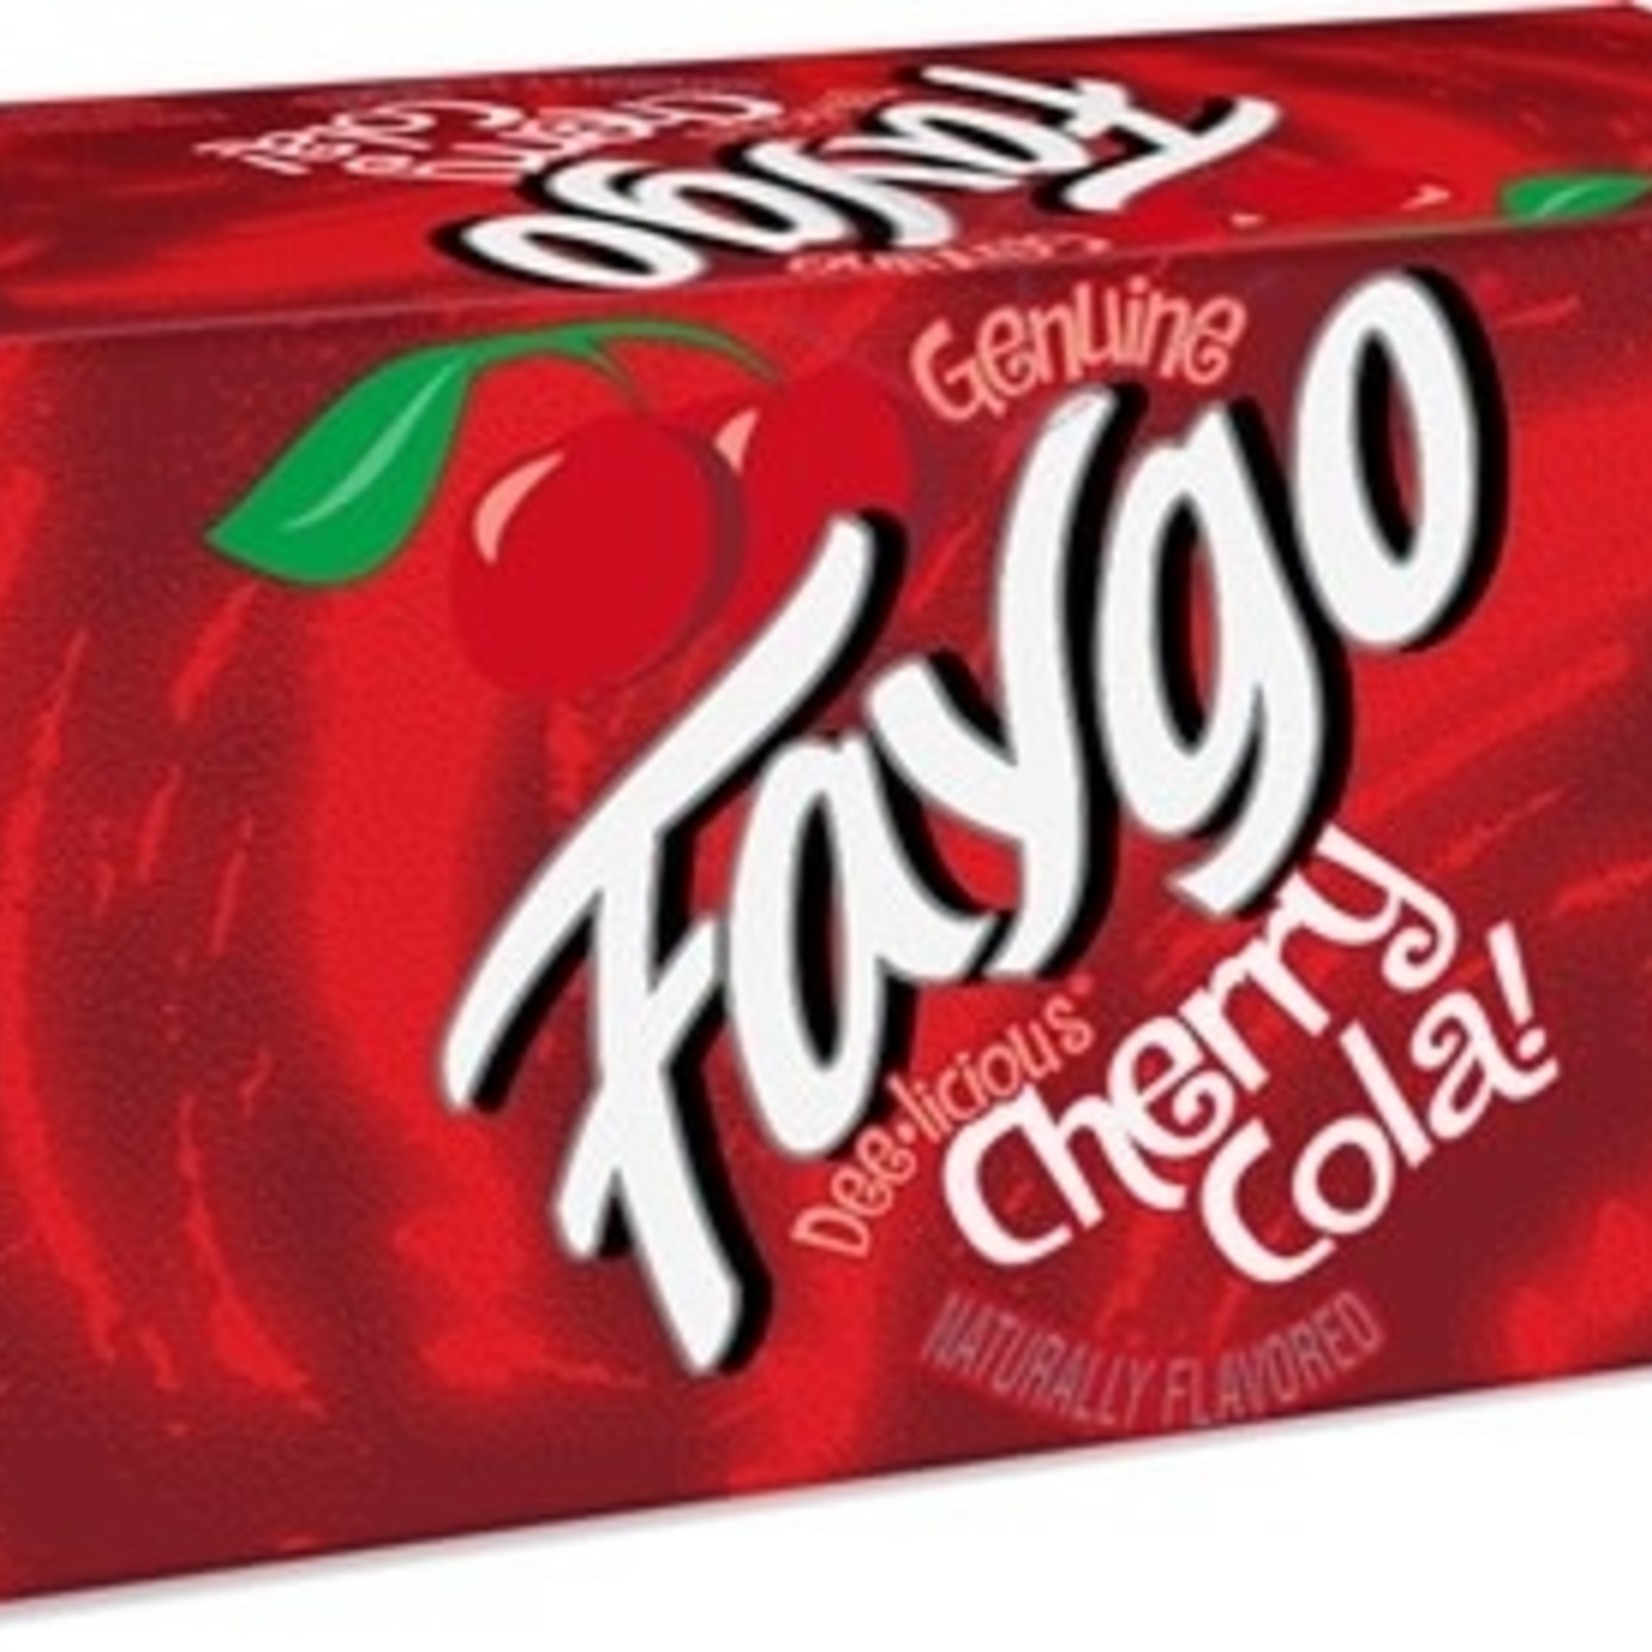 Faygo Soda Pop 8 Pack - Cherry Cola